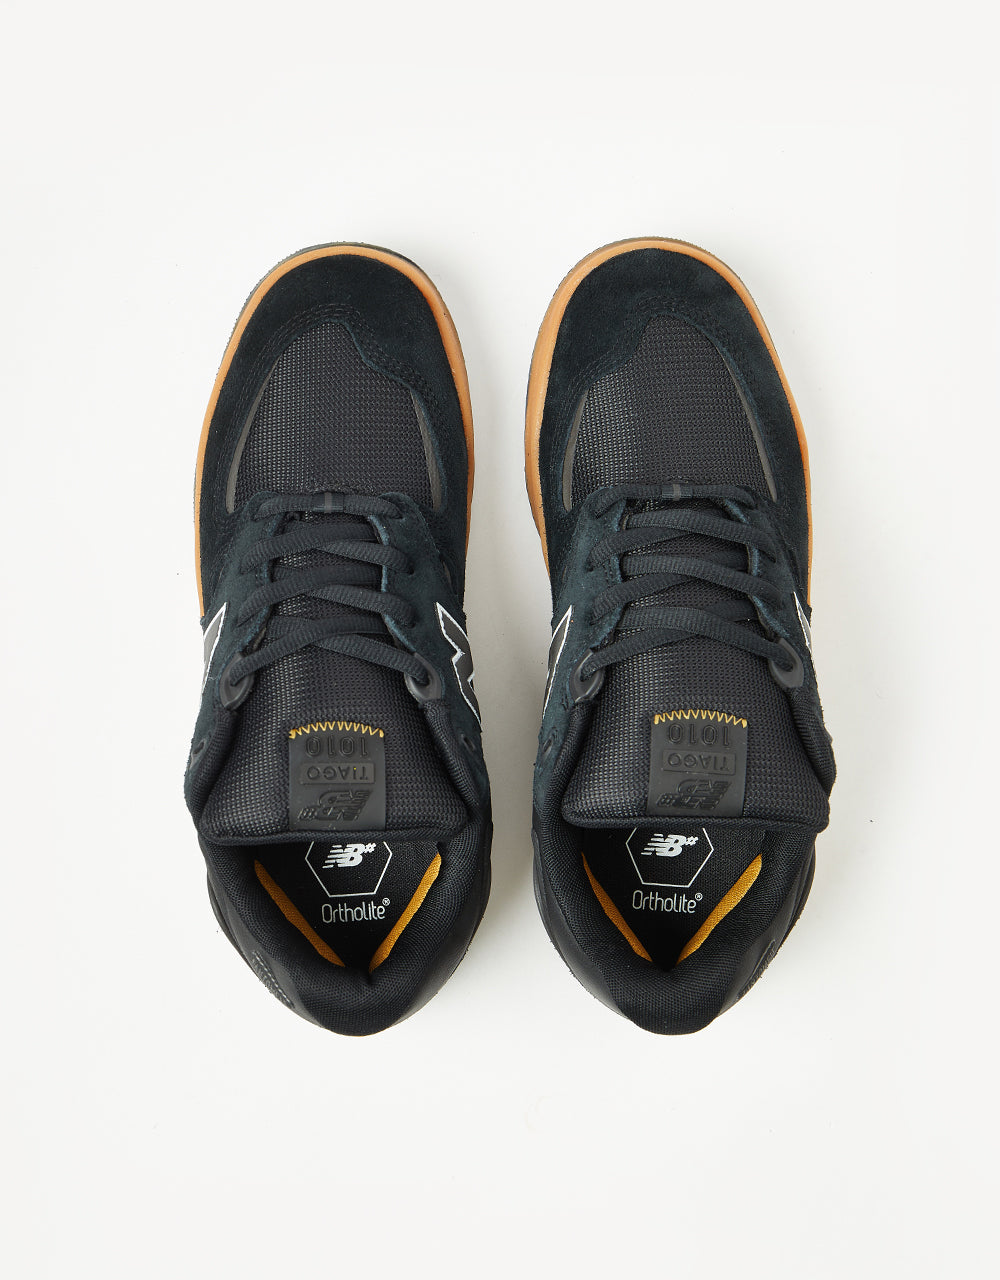 New Balance Numeric 1010 Skate Shoes - Black/Gum